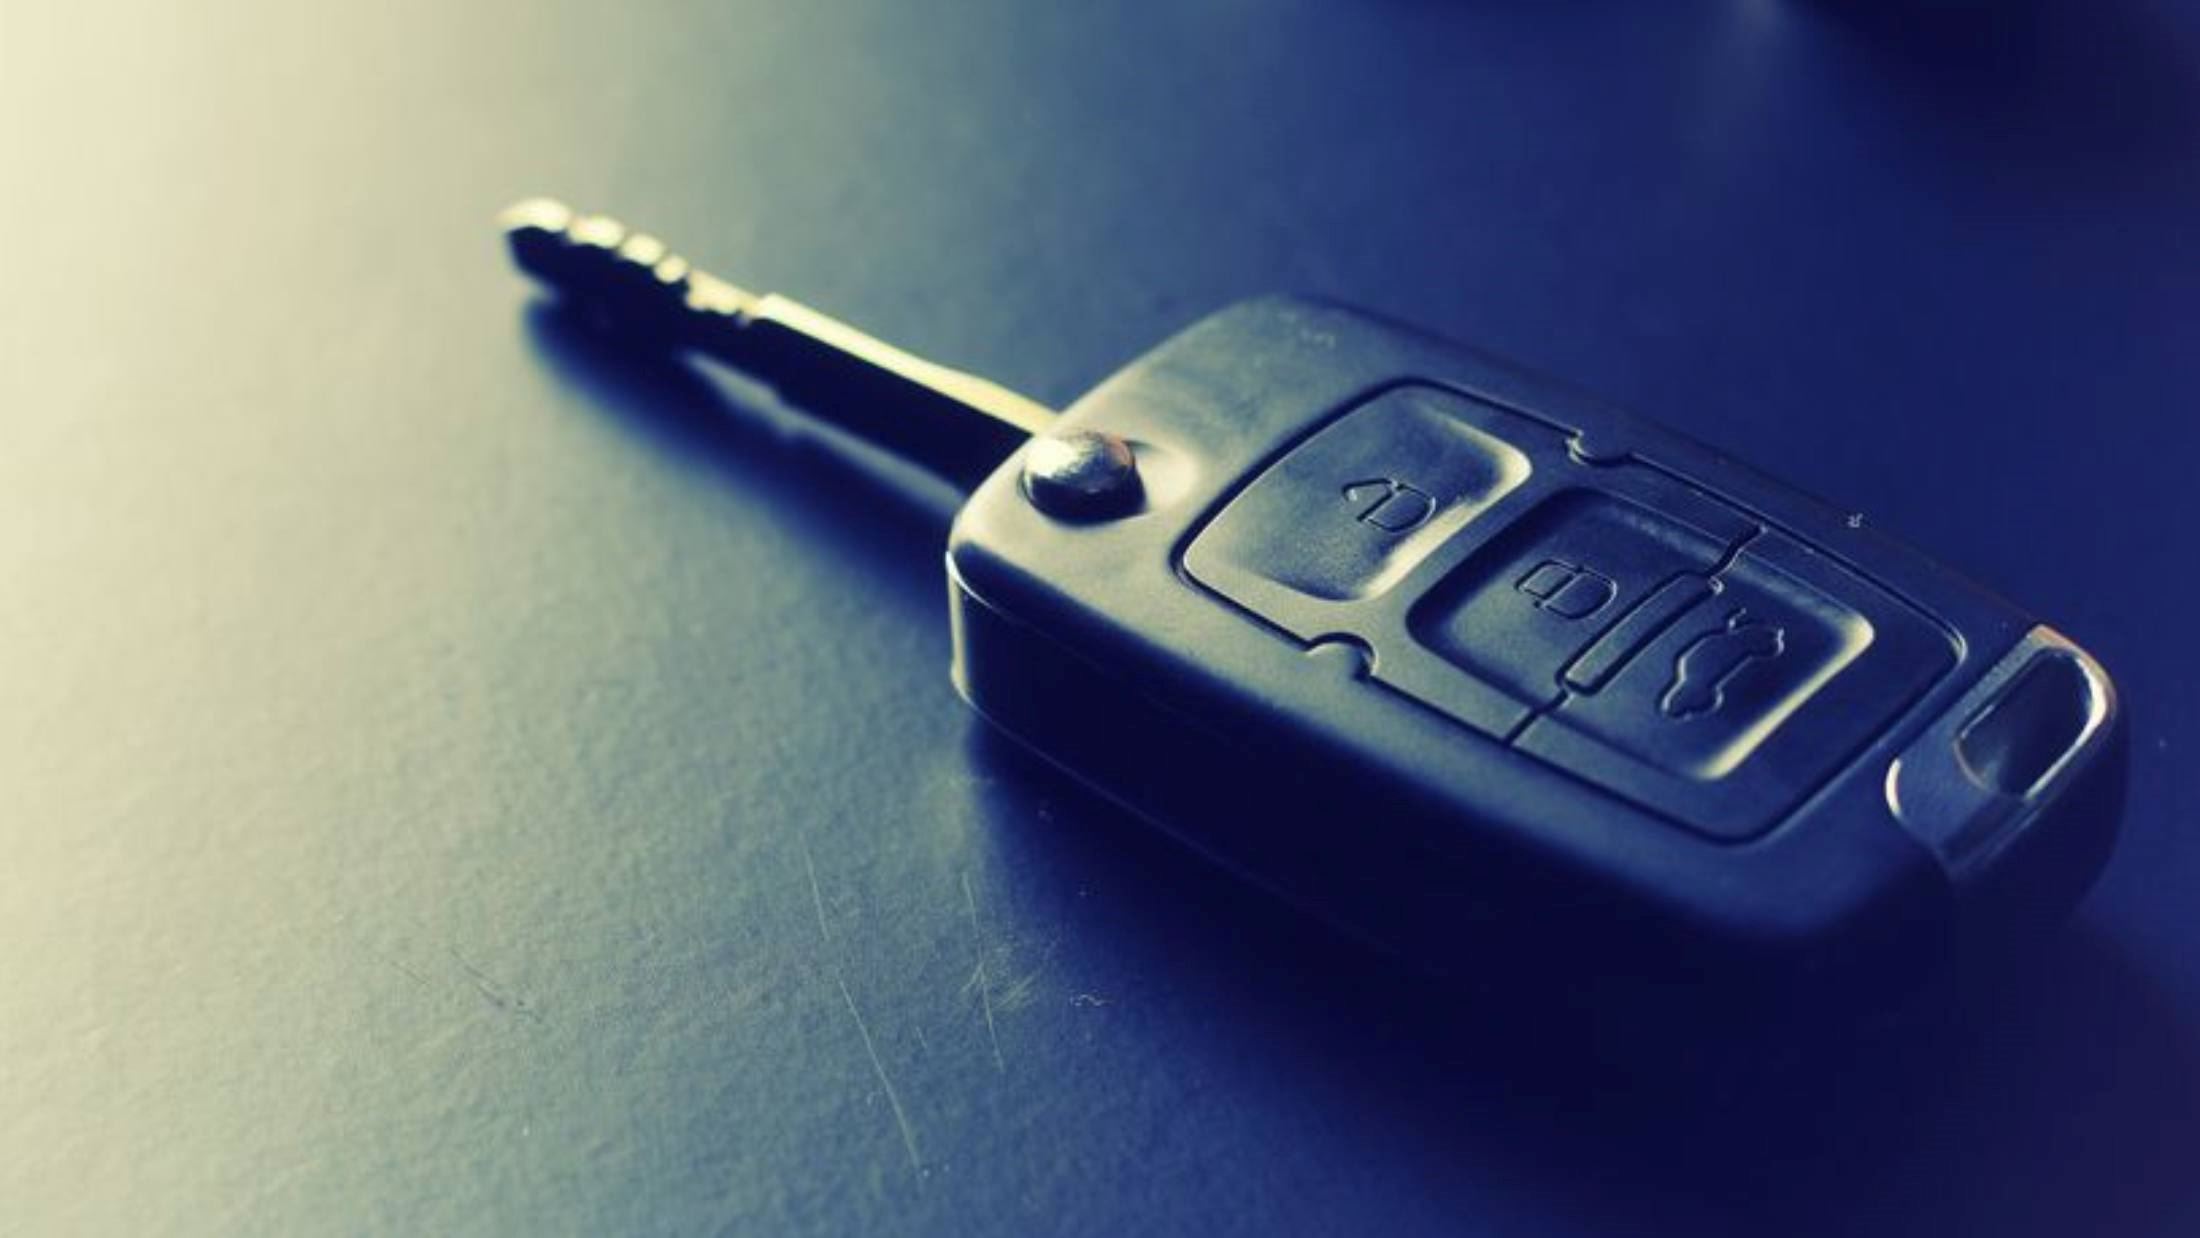 Black car key resting on a leather seat